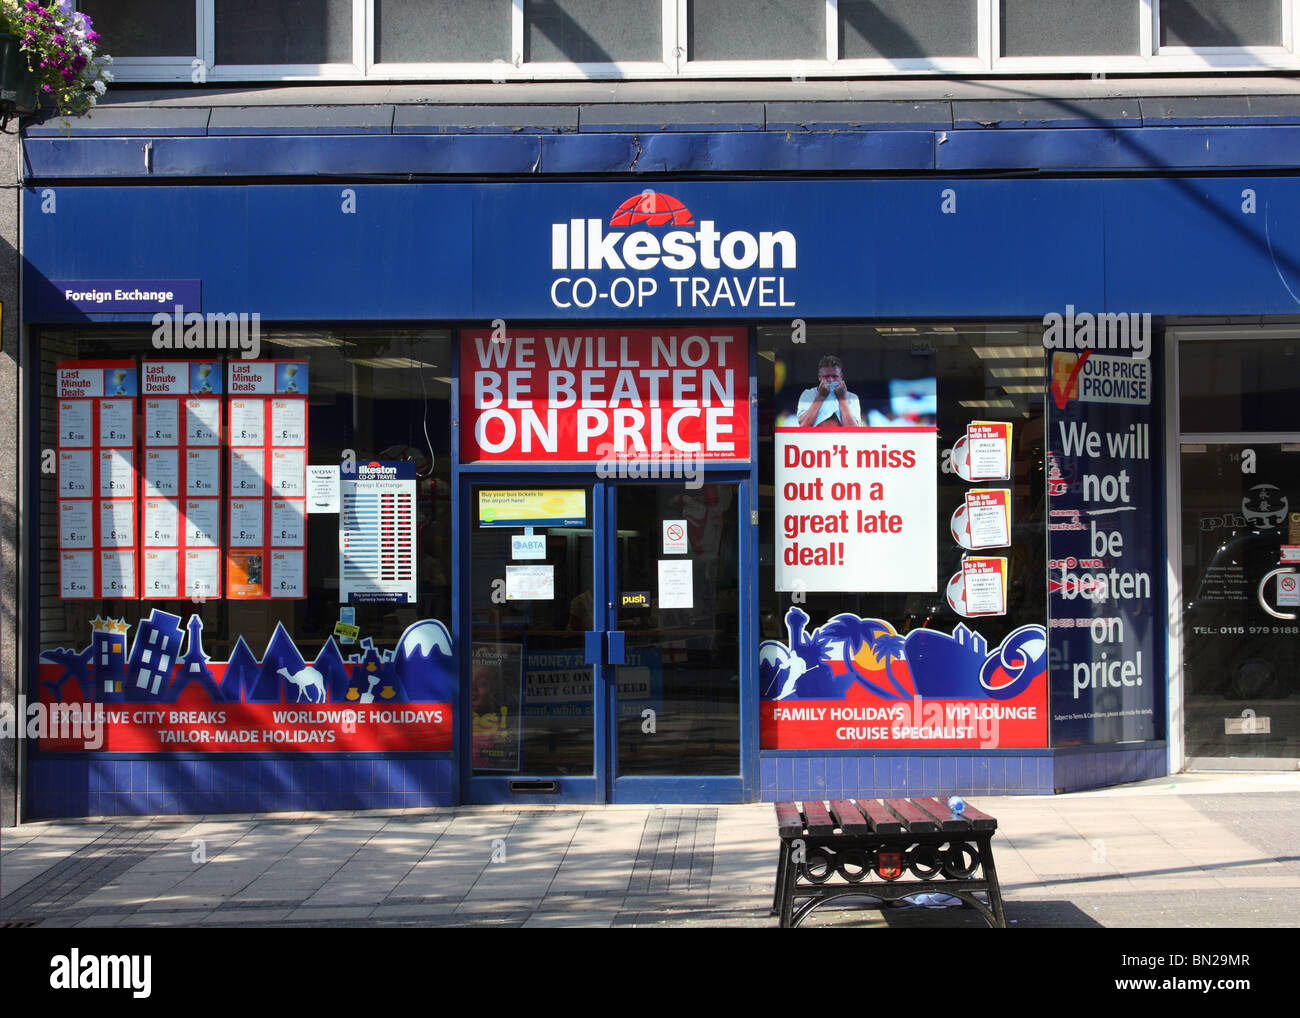 Ein Ilkeston Koop-Reisebüro in einer Stadt, U.K. Stockfoto